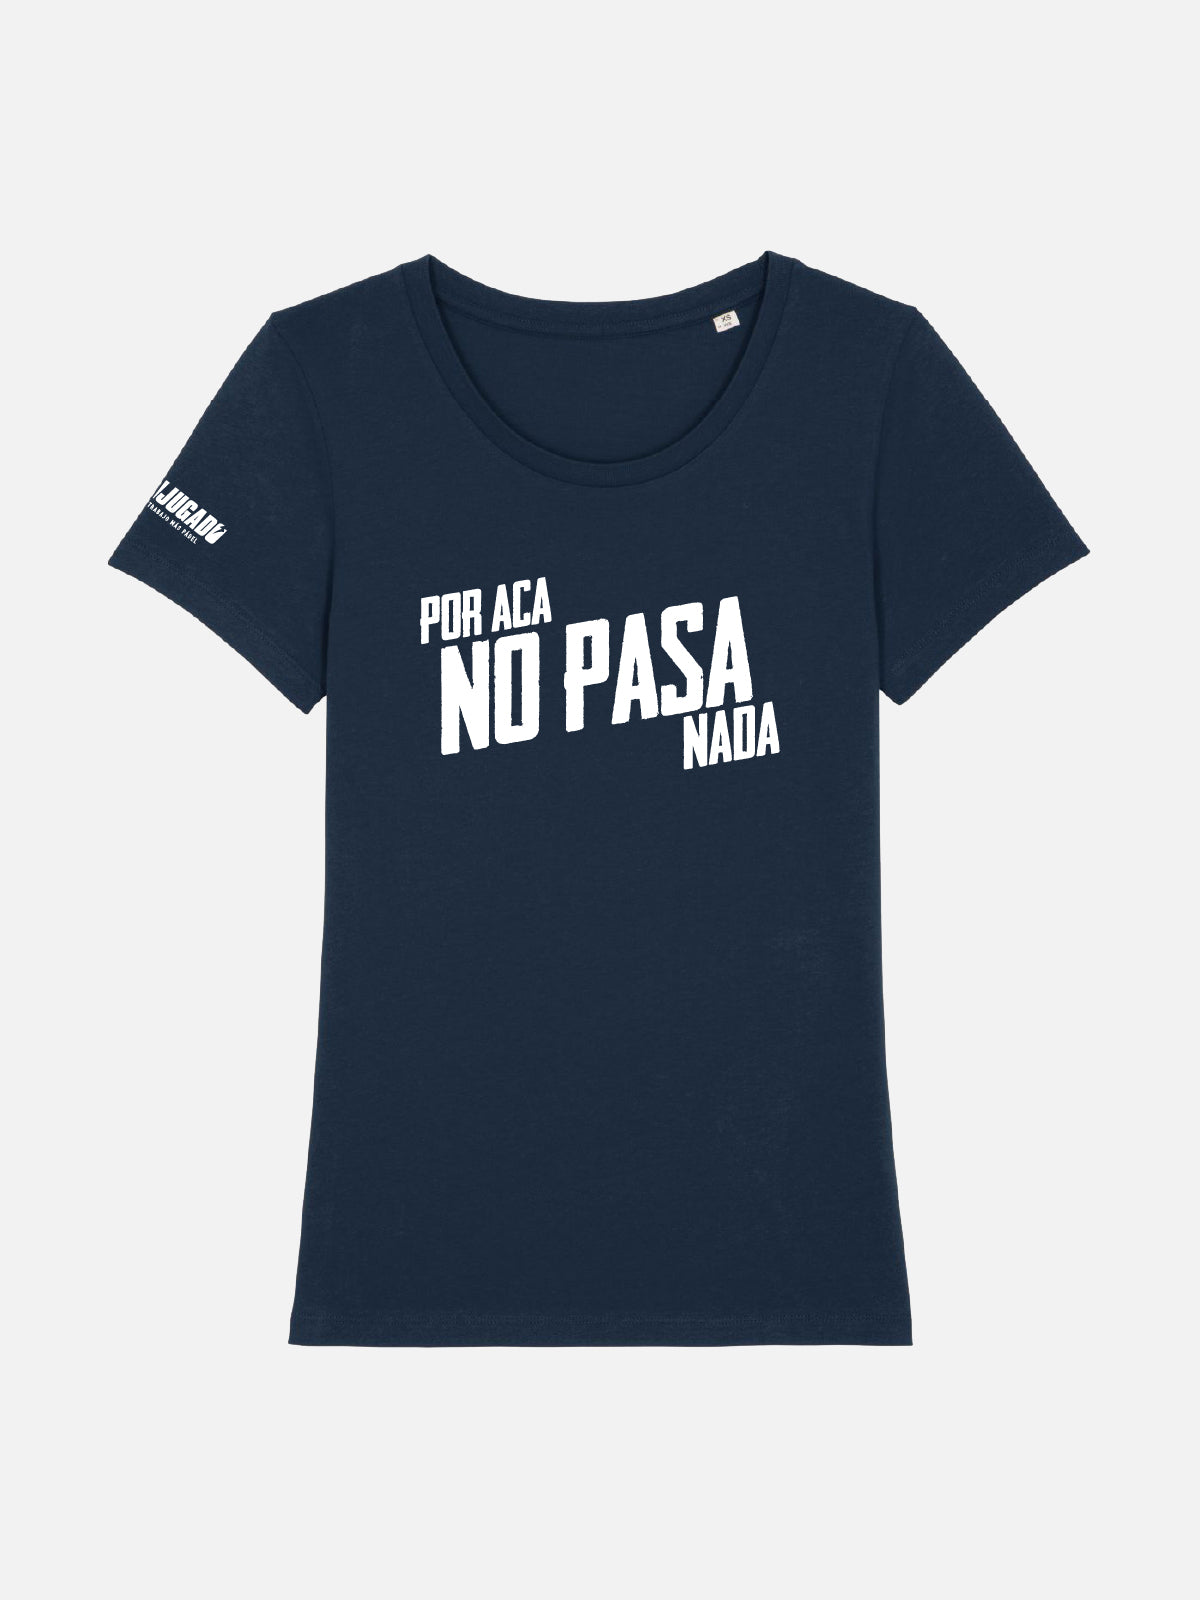 Women's Fun T-Shirt - Por Aca No Pasa Nada